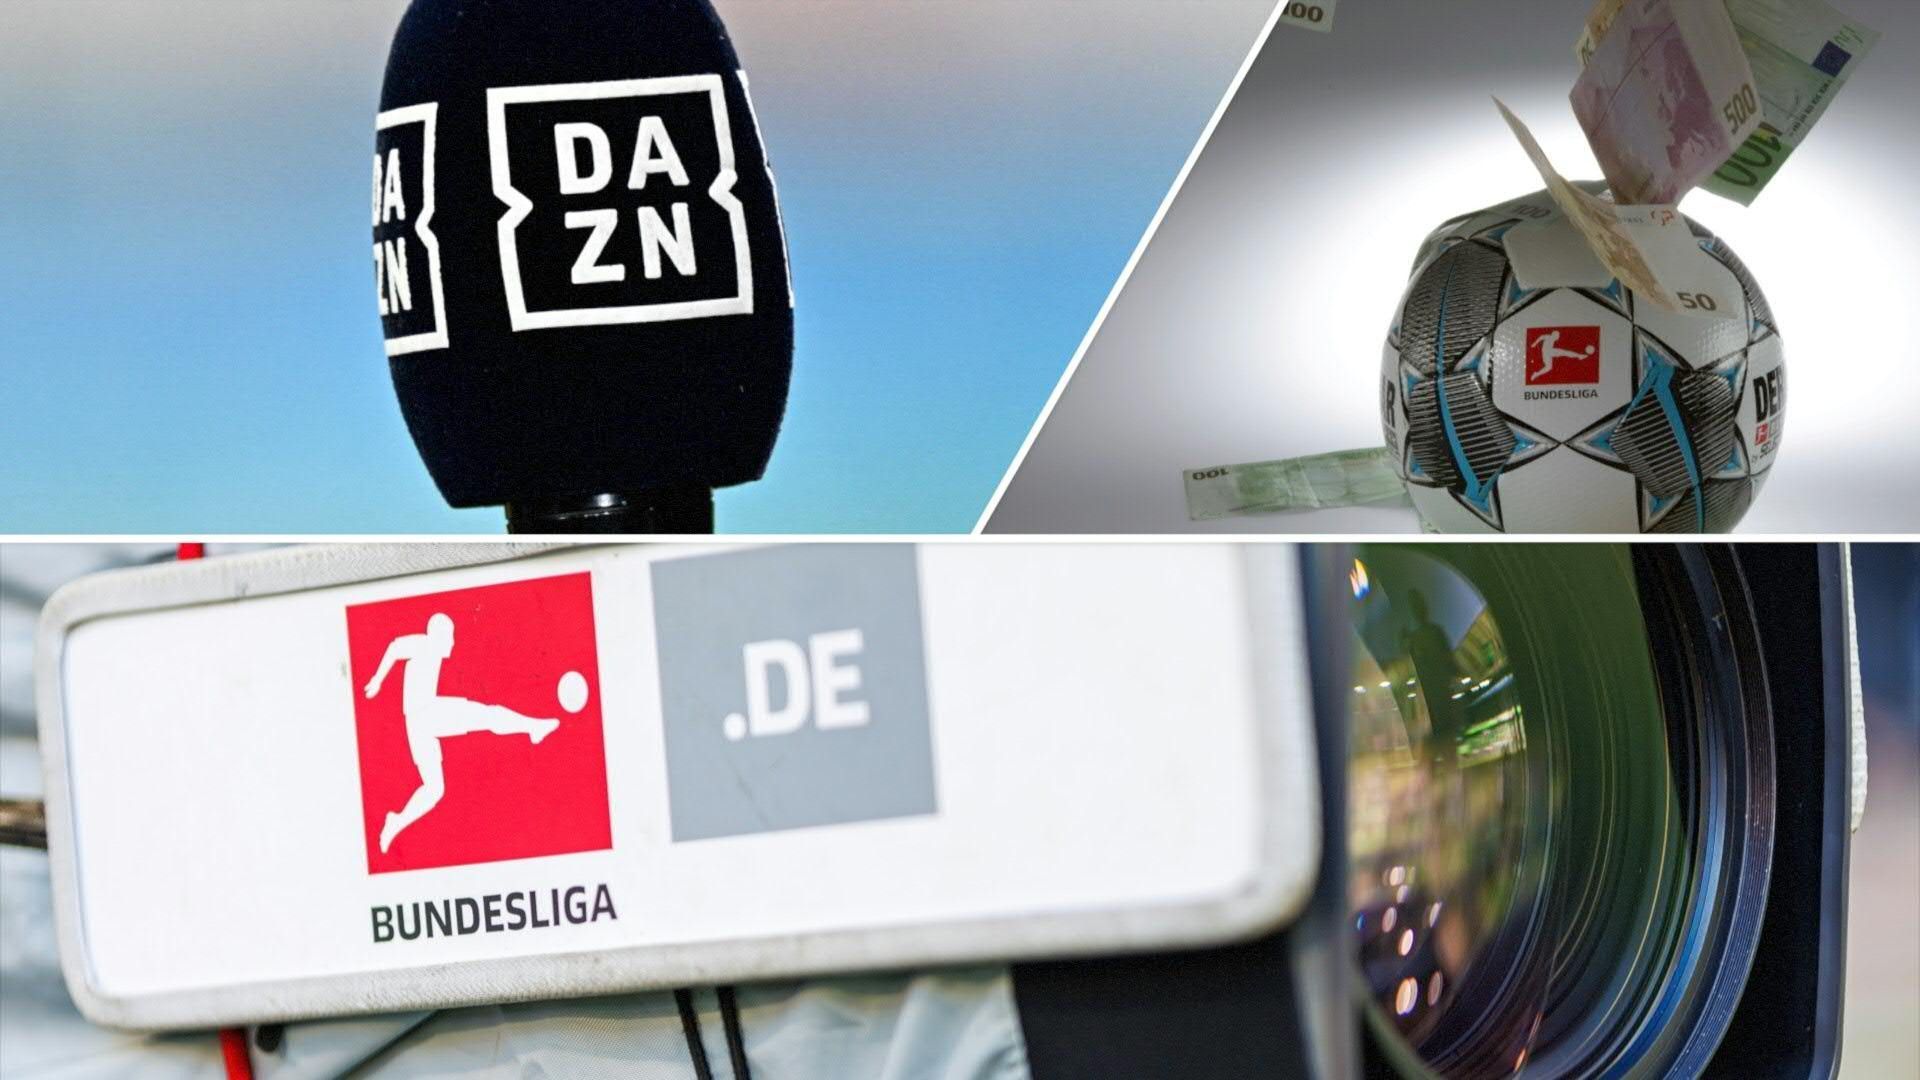 TV spat escalates: DAZN announces legal action